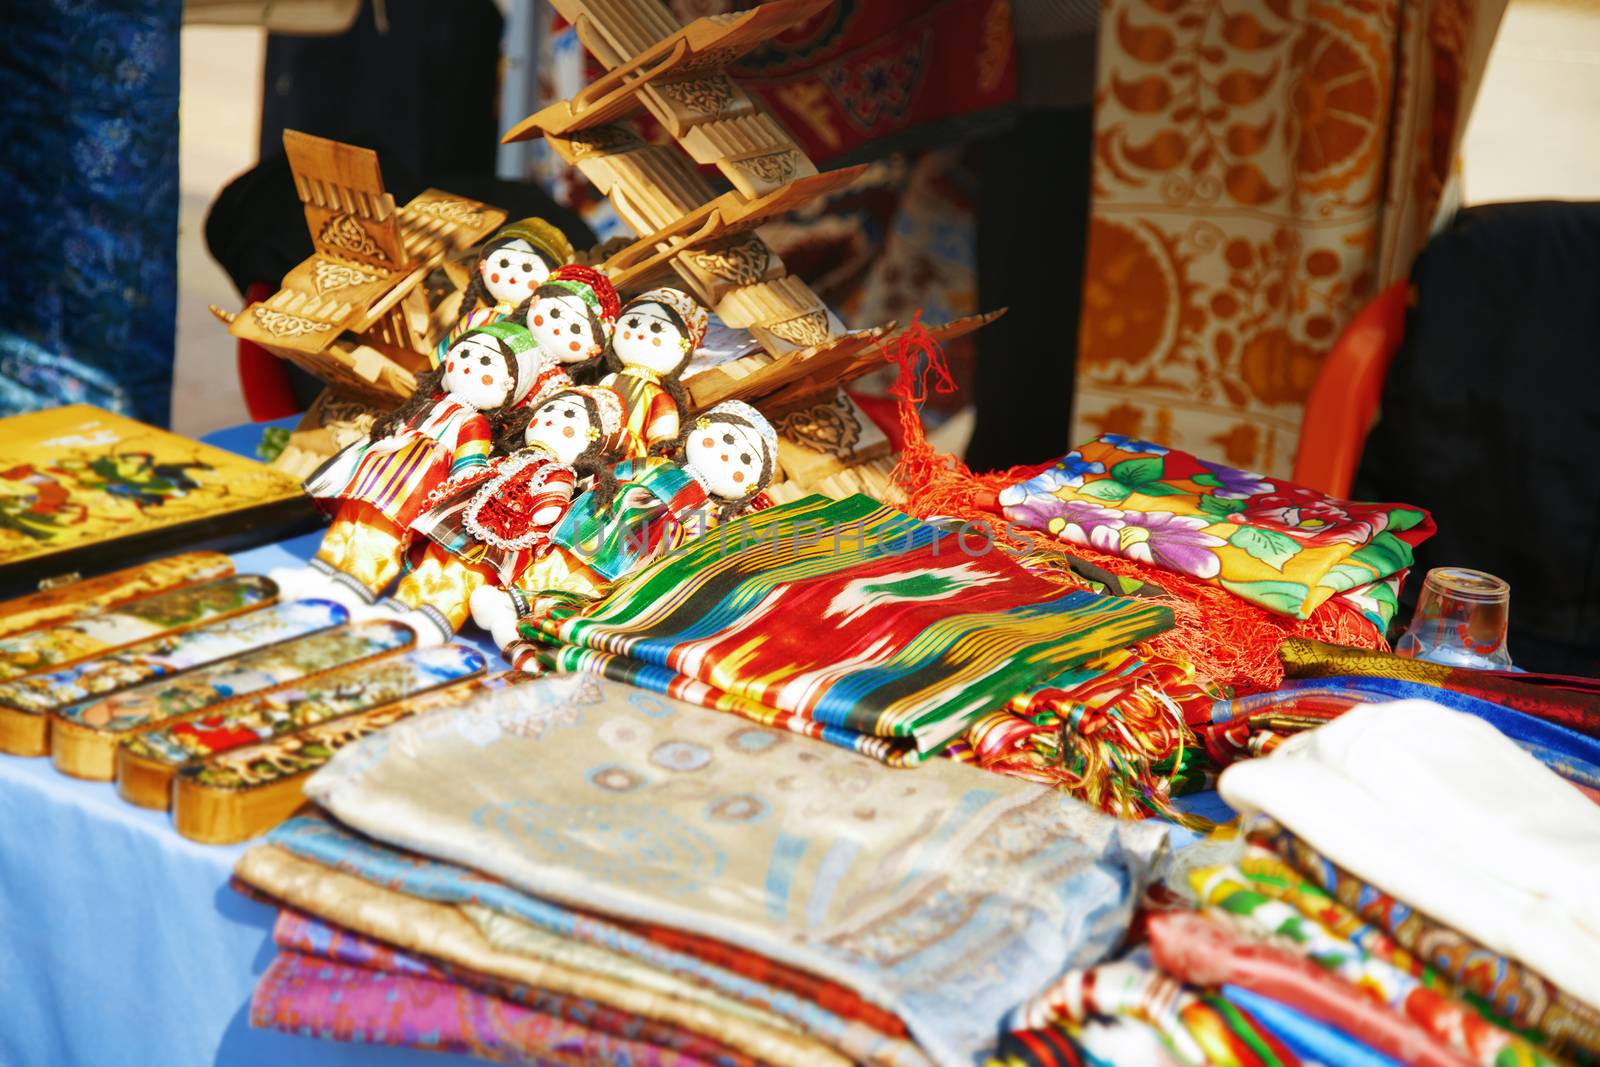 Handmade items in the open-air flea market